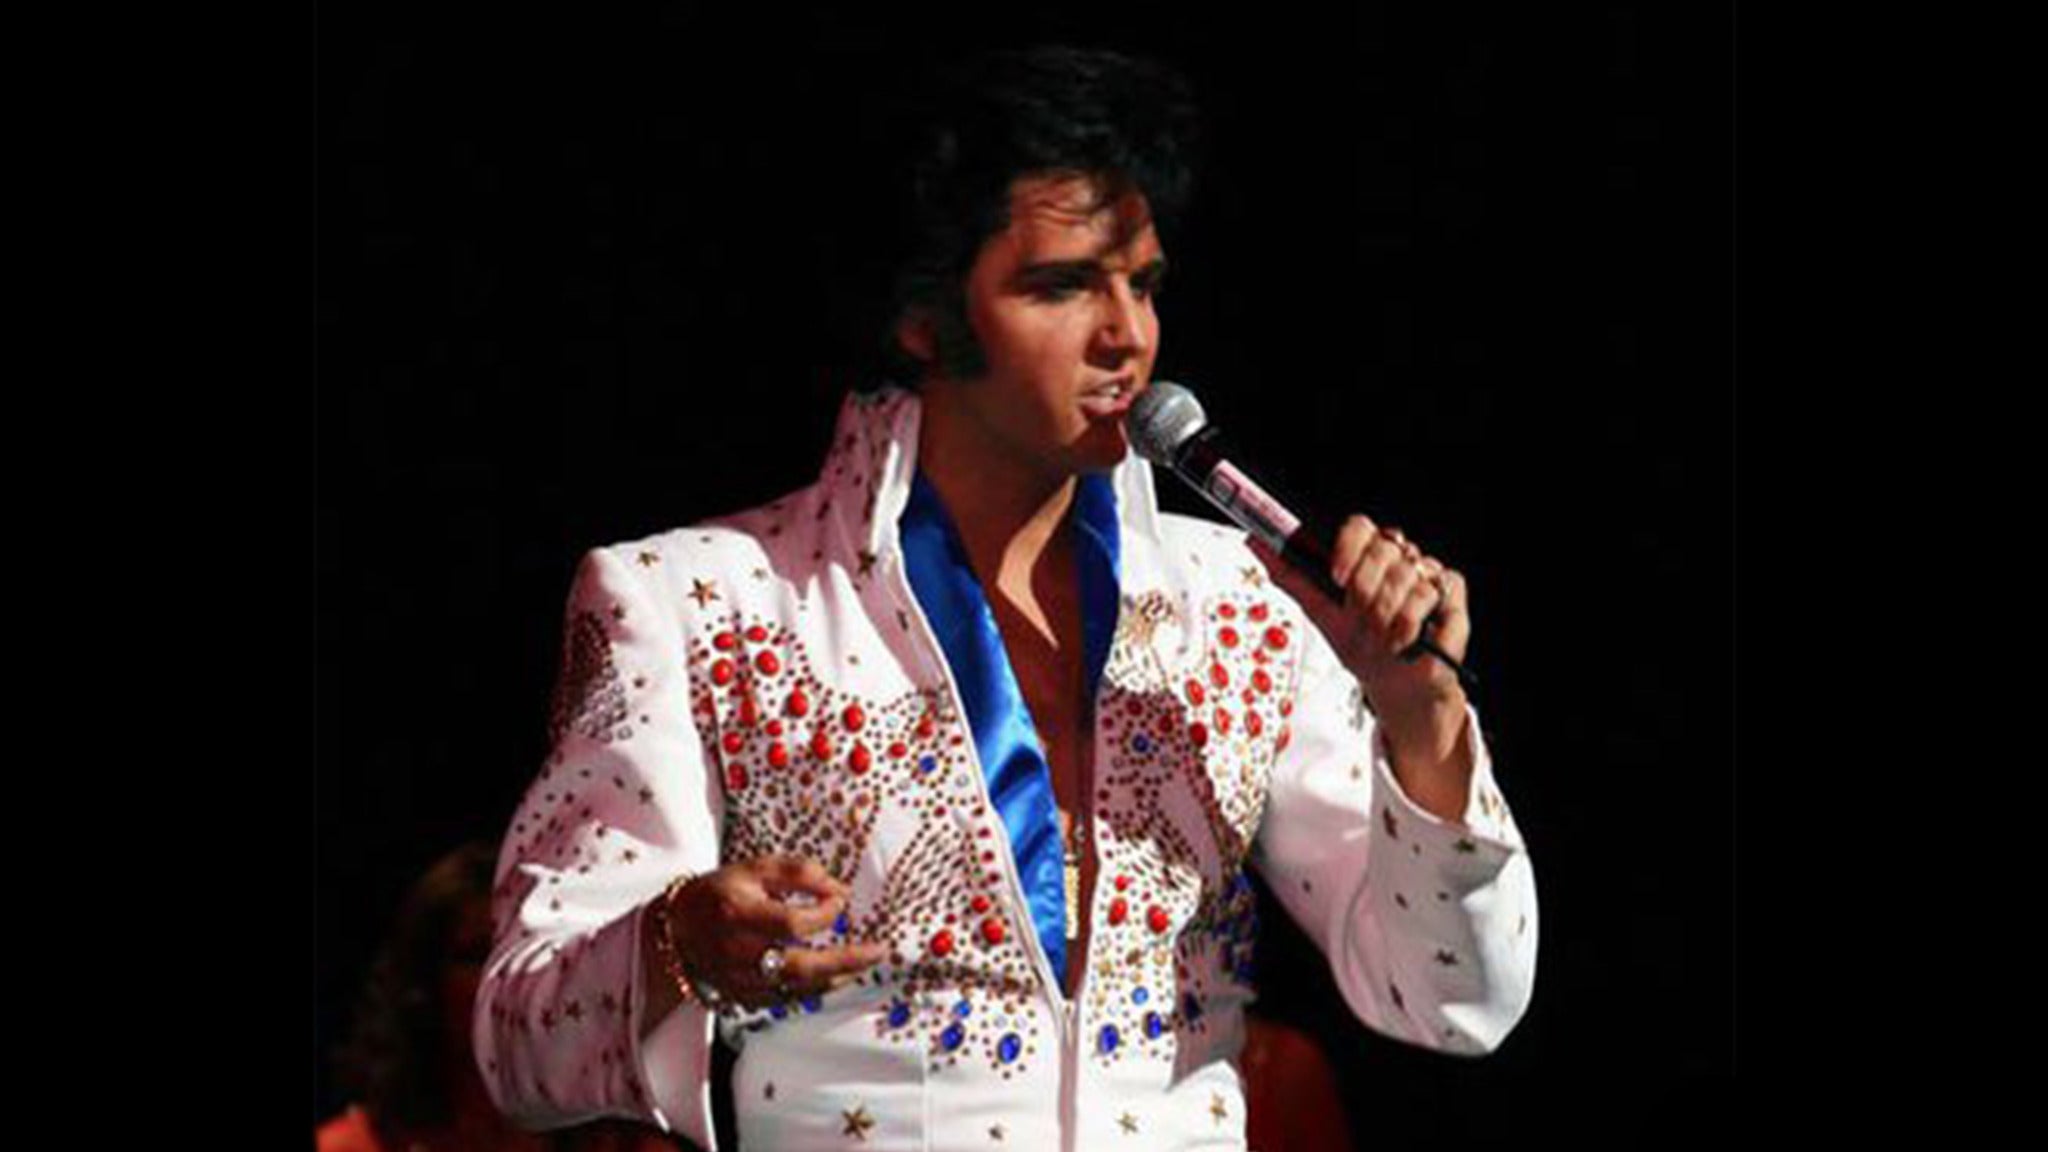 WCPAP presents The Wonder of Elvis starring Donny Edwards